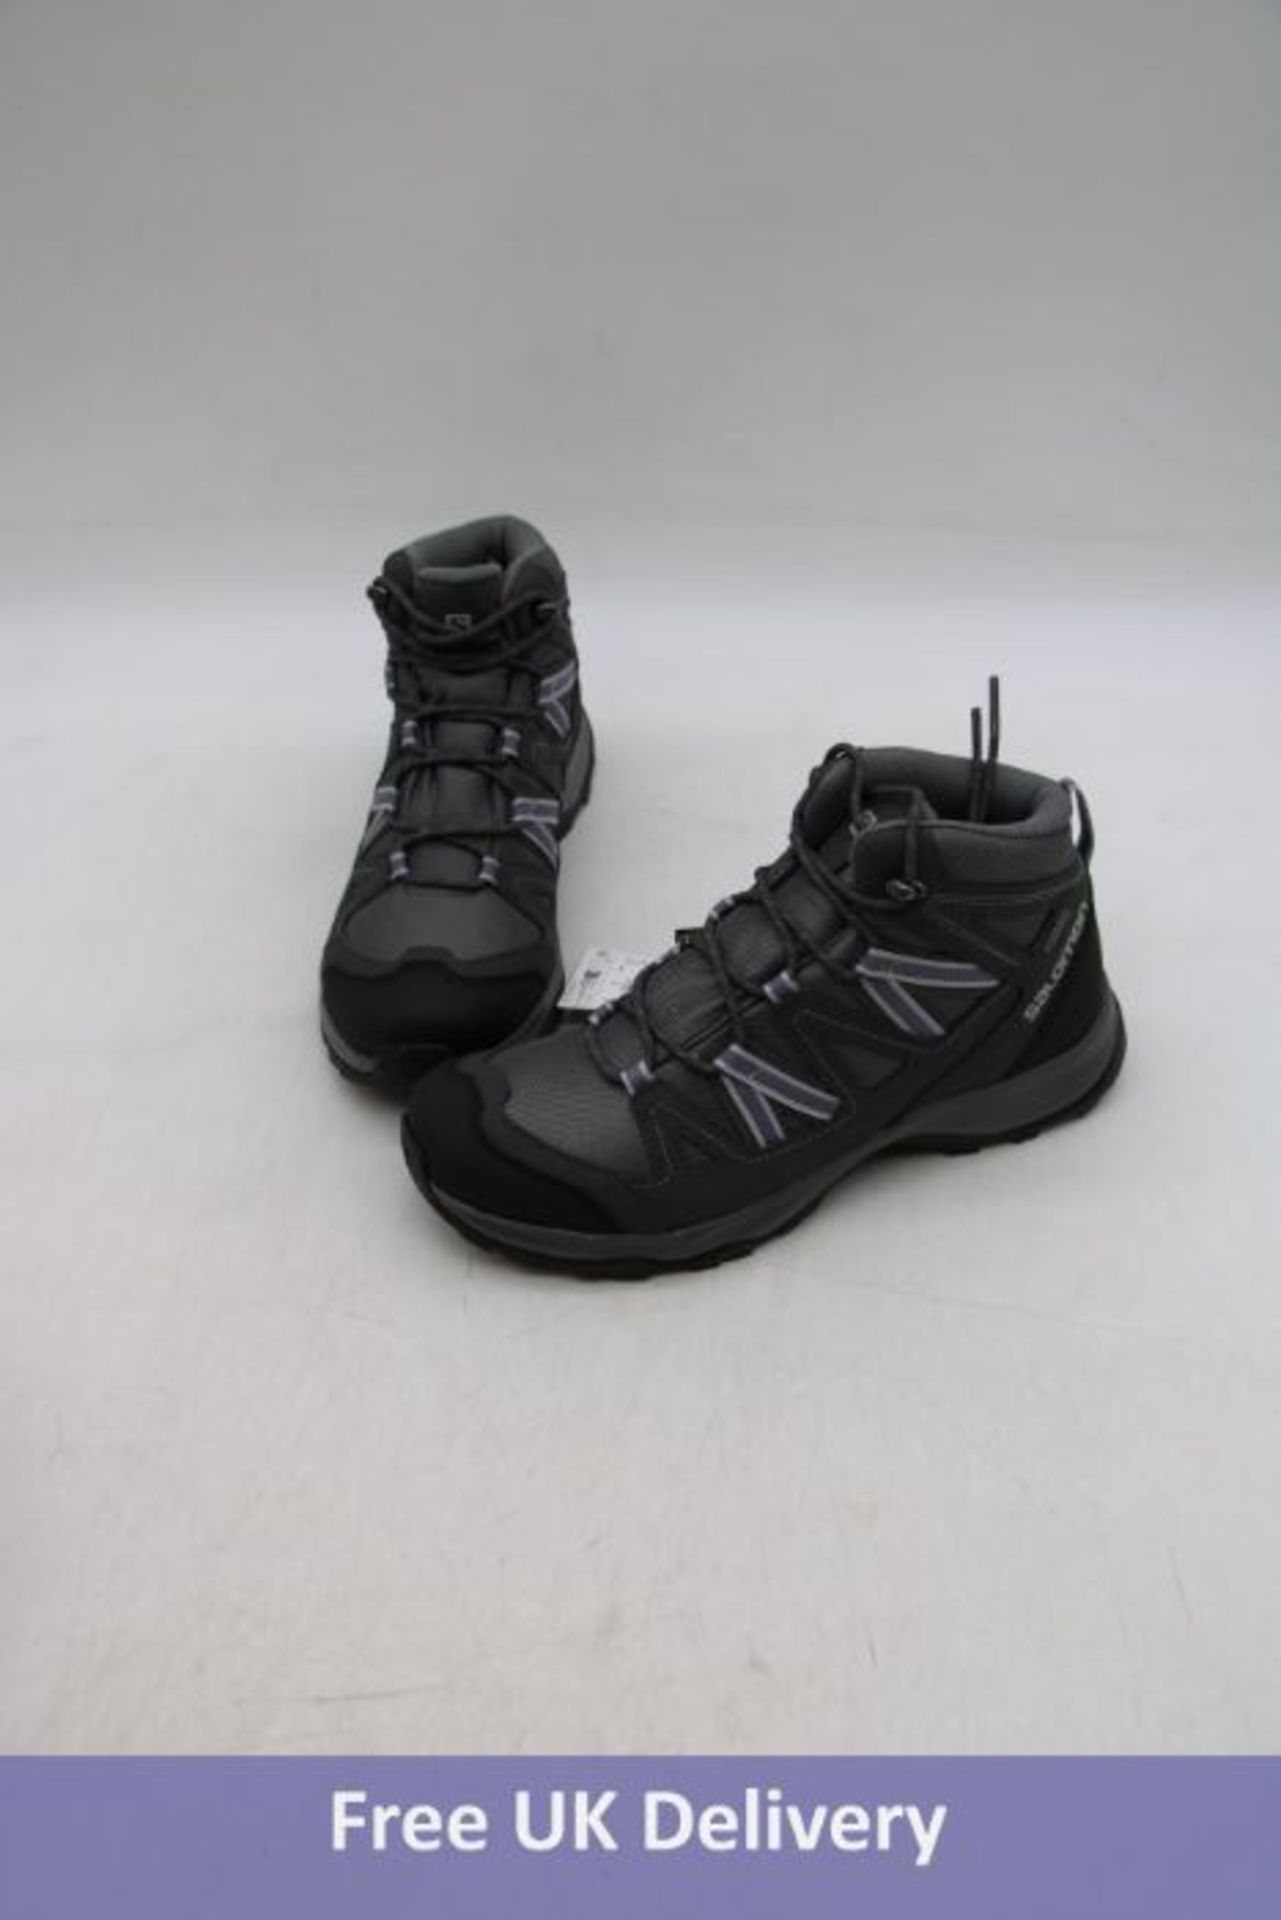 Salomon Woman's Leighton Mid GTX Walking Boots, Grey/Black, UK 8, No Box